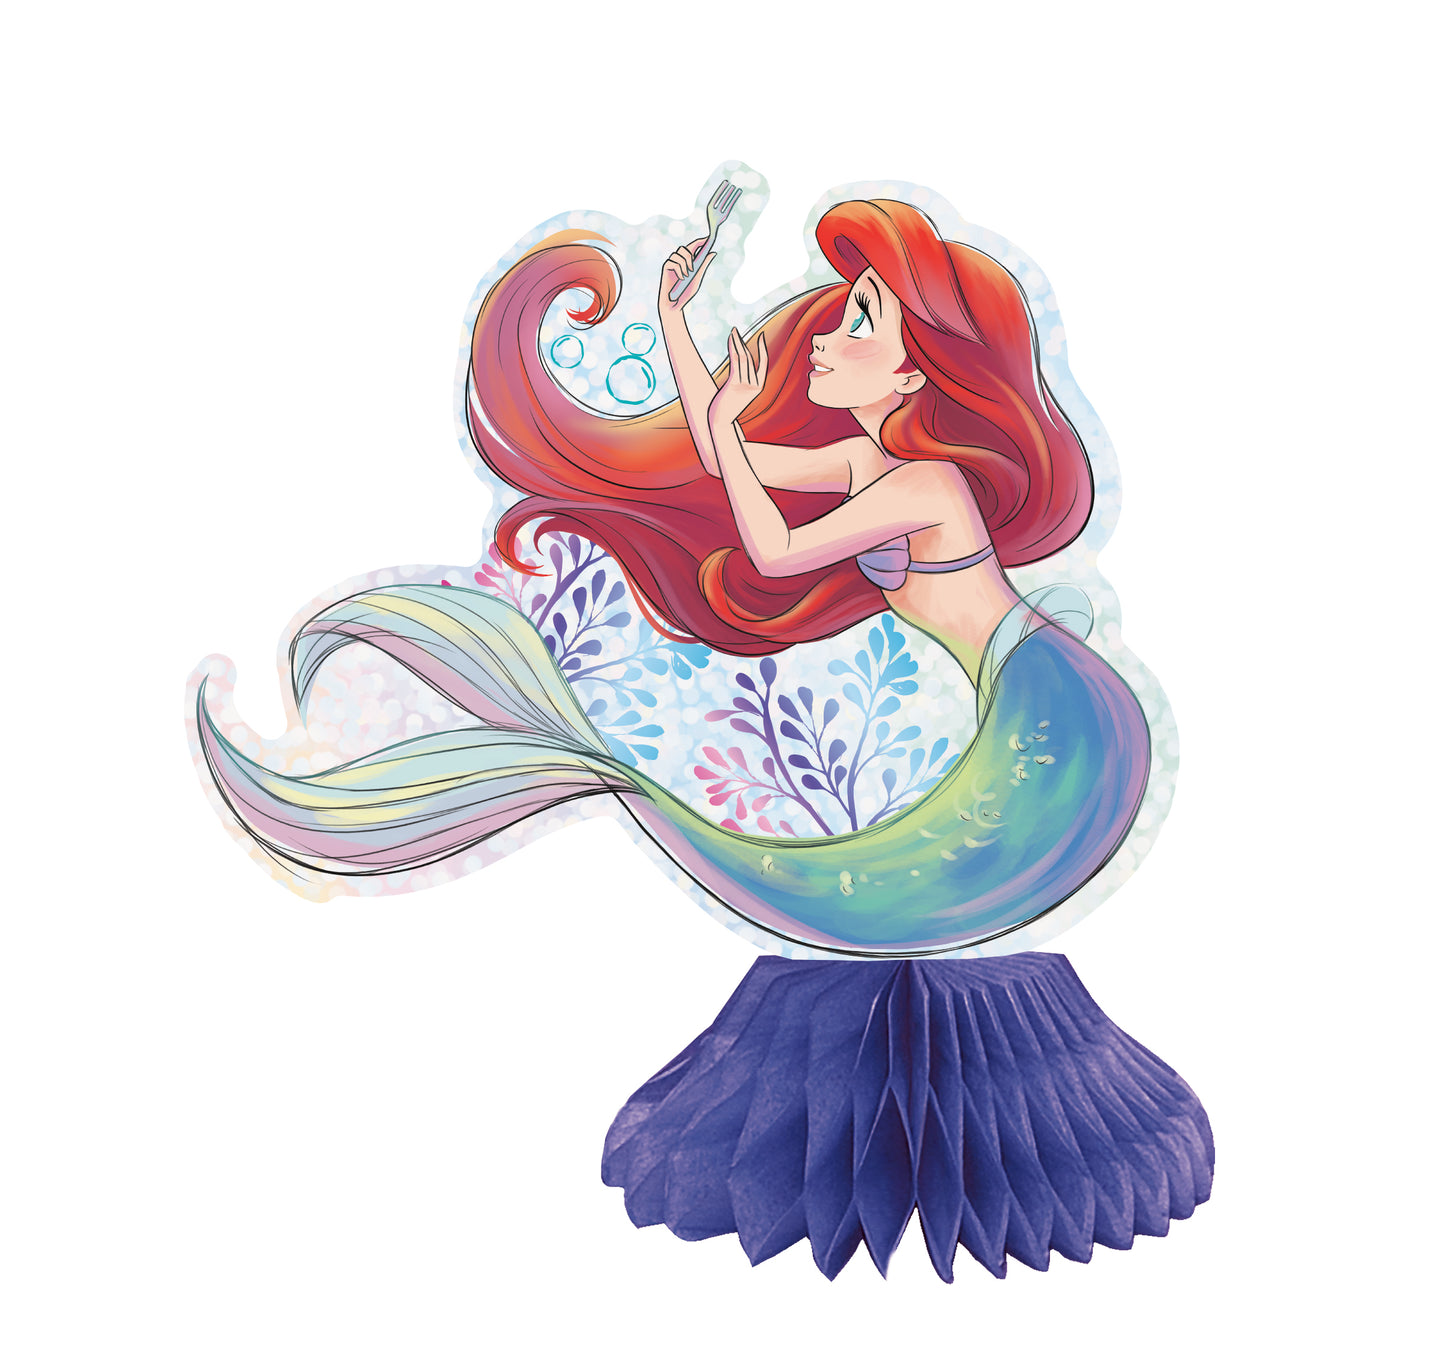 Disney The Little Mermaid Decorating Kit, 7-pc